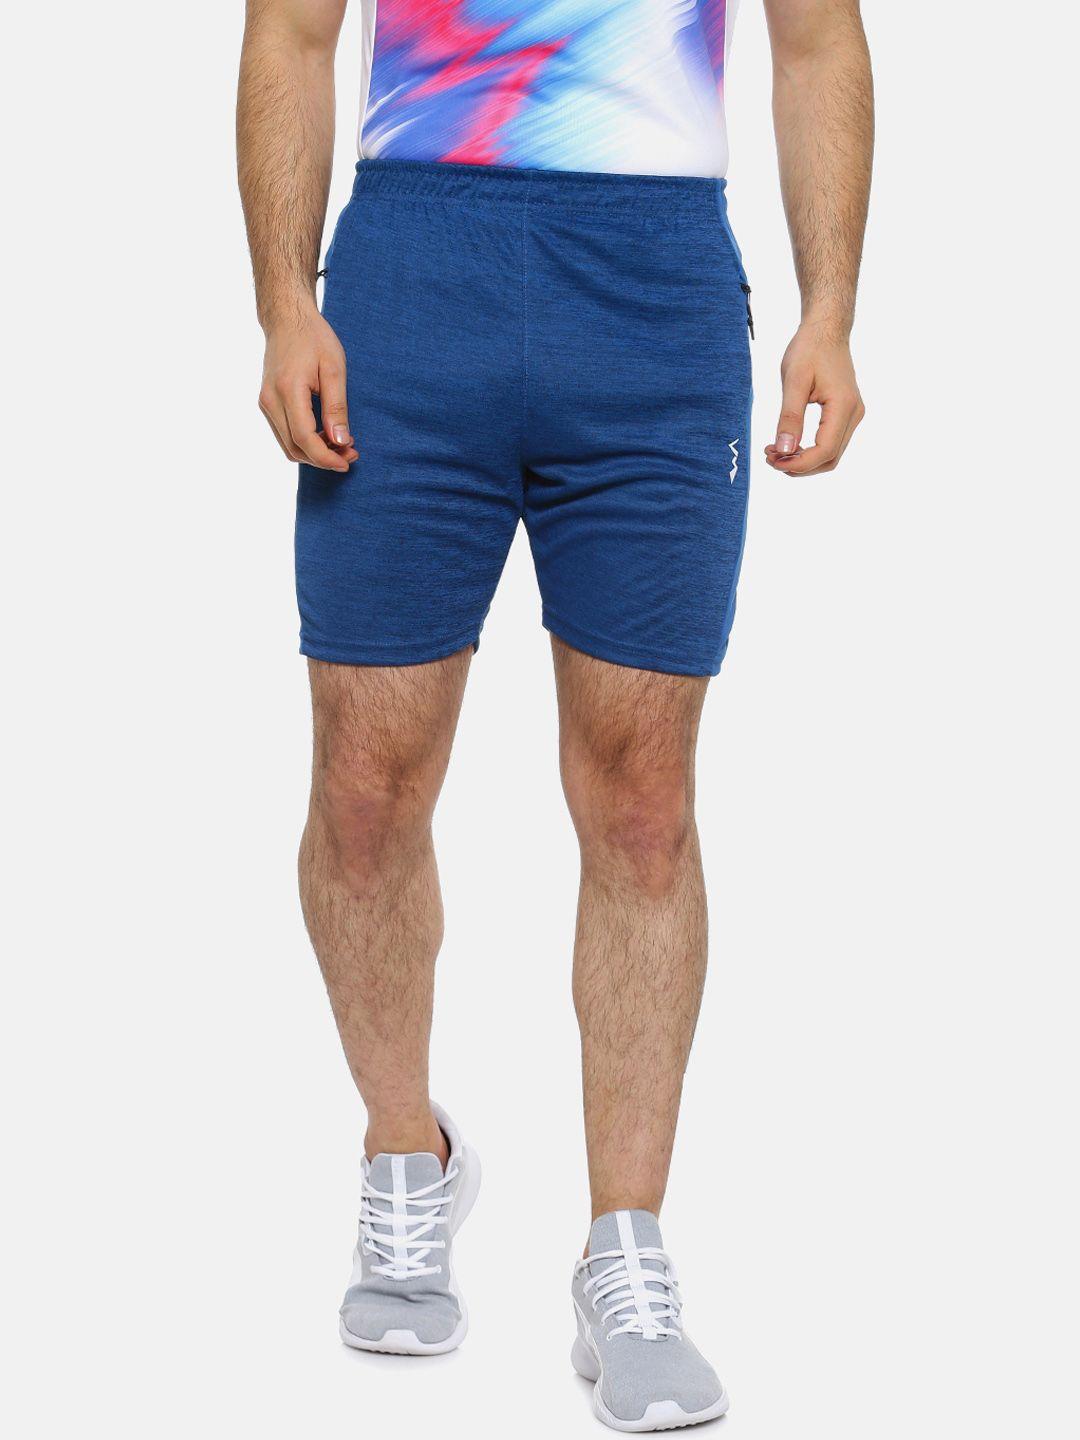 campus sutra men teal blue solid regular fit regular shorts